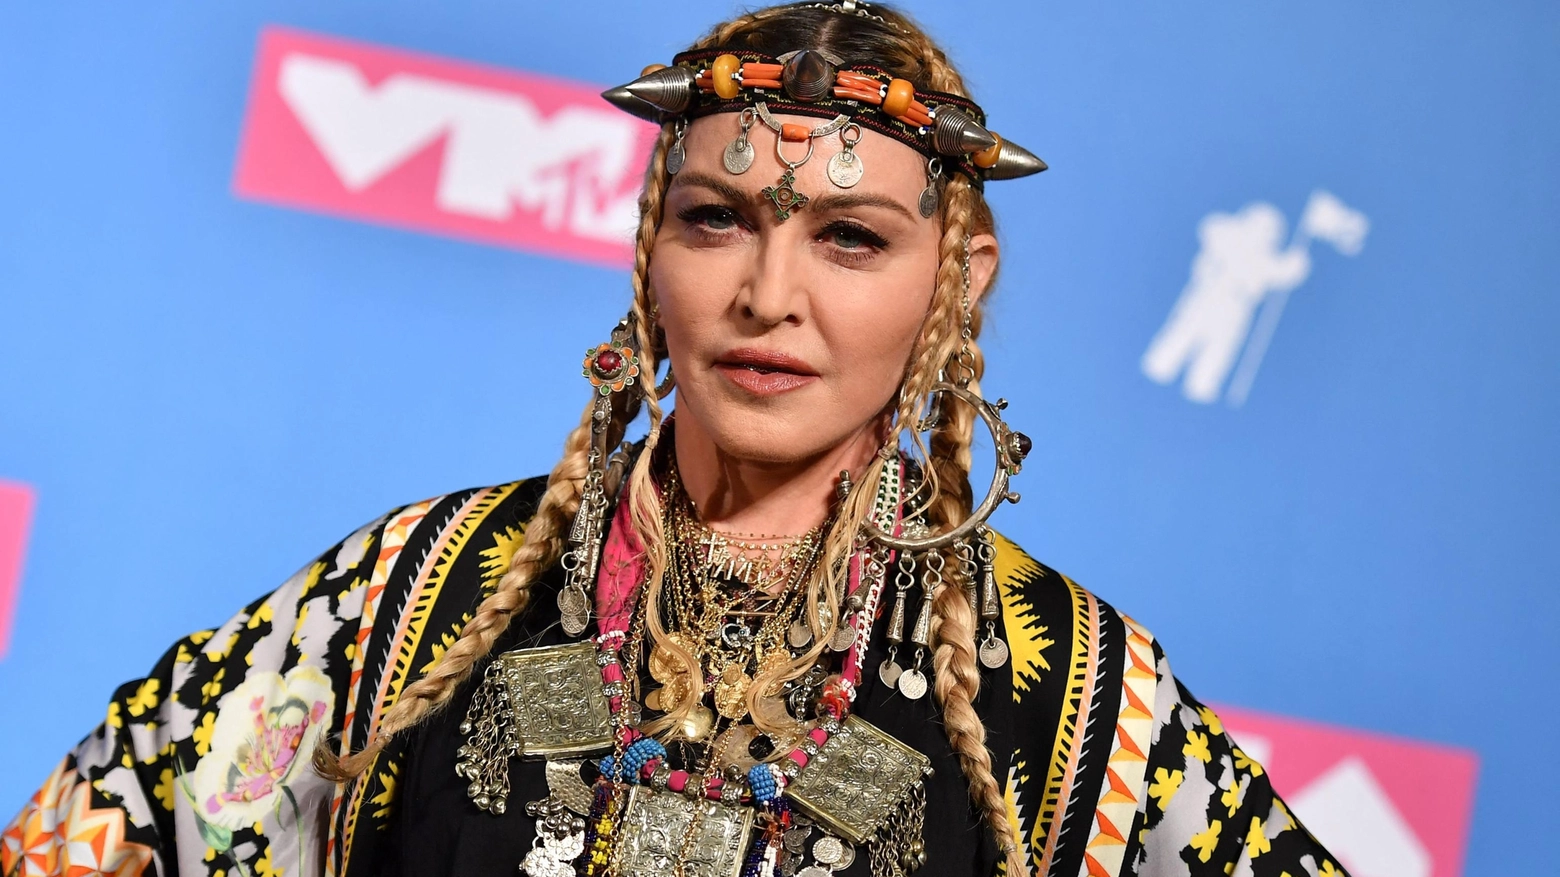 La pop star Madonna, 64 anni